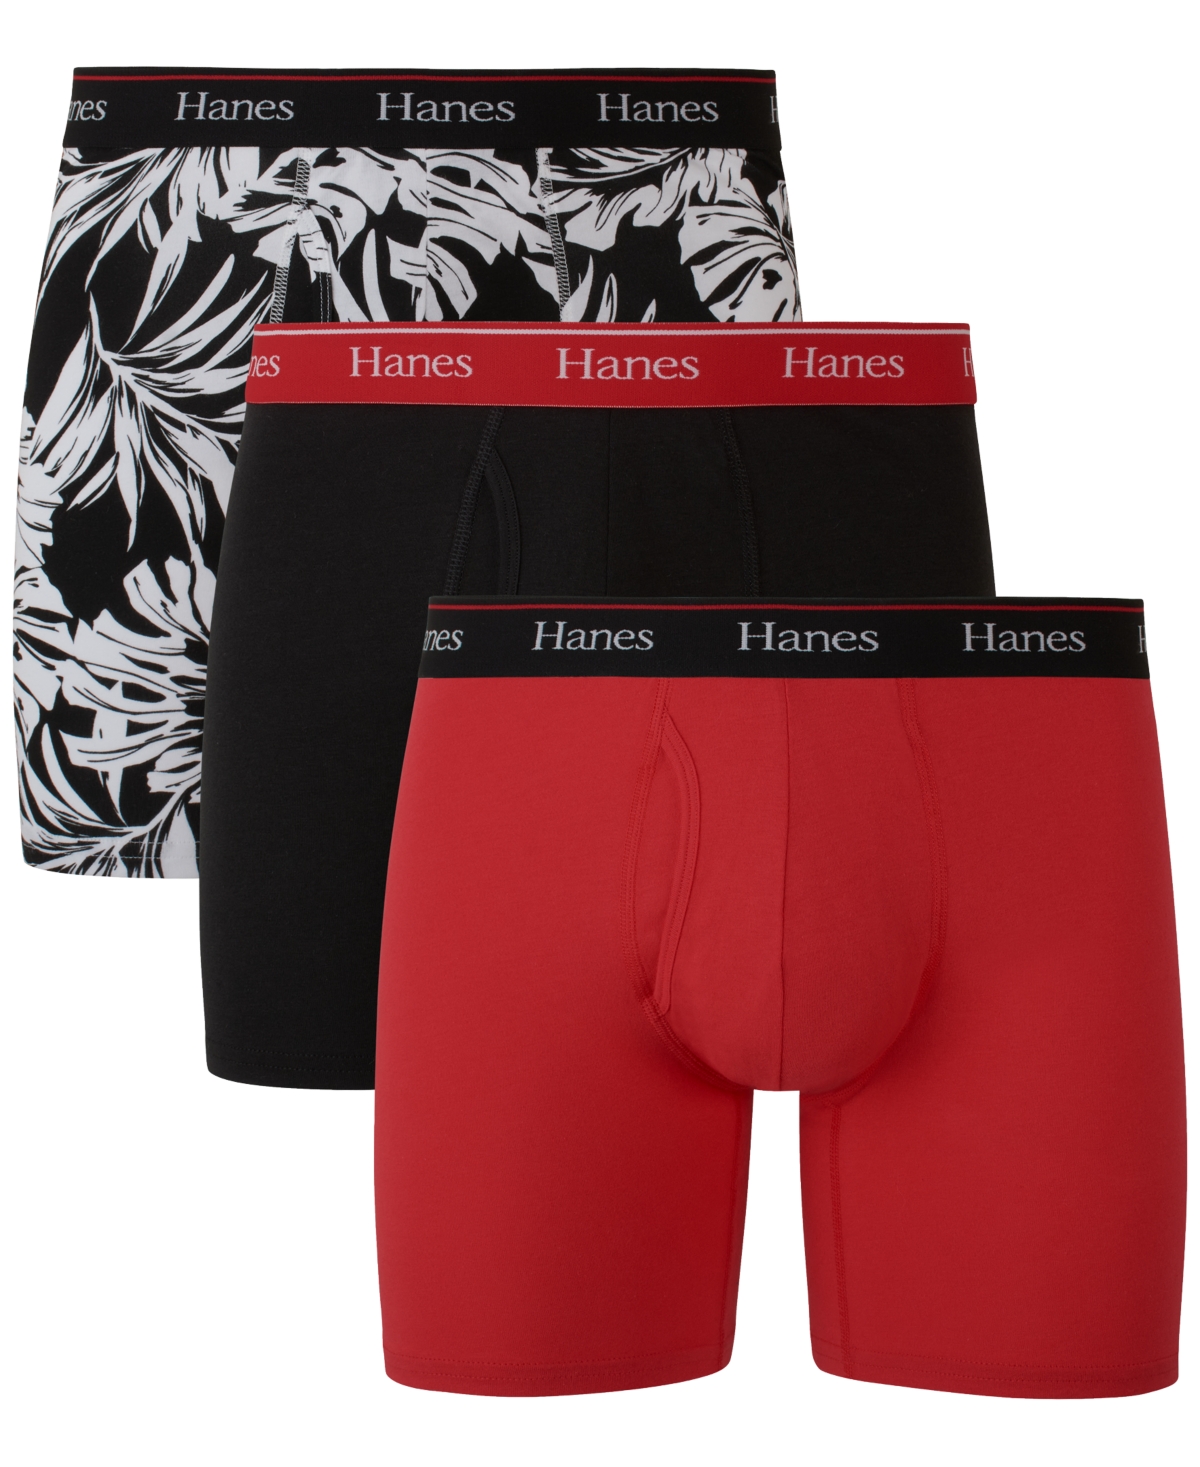 Hanes Mens Comfort Flex Fit Boxer Briefs Sport Mesh Underwear (3 Pk)  Black/Gray